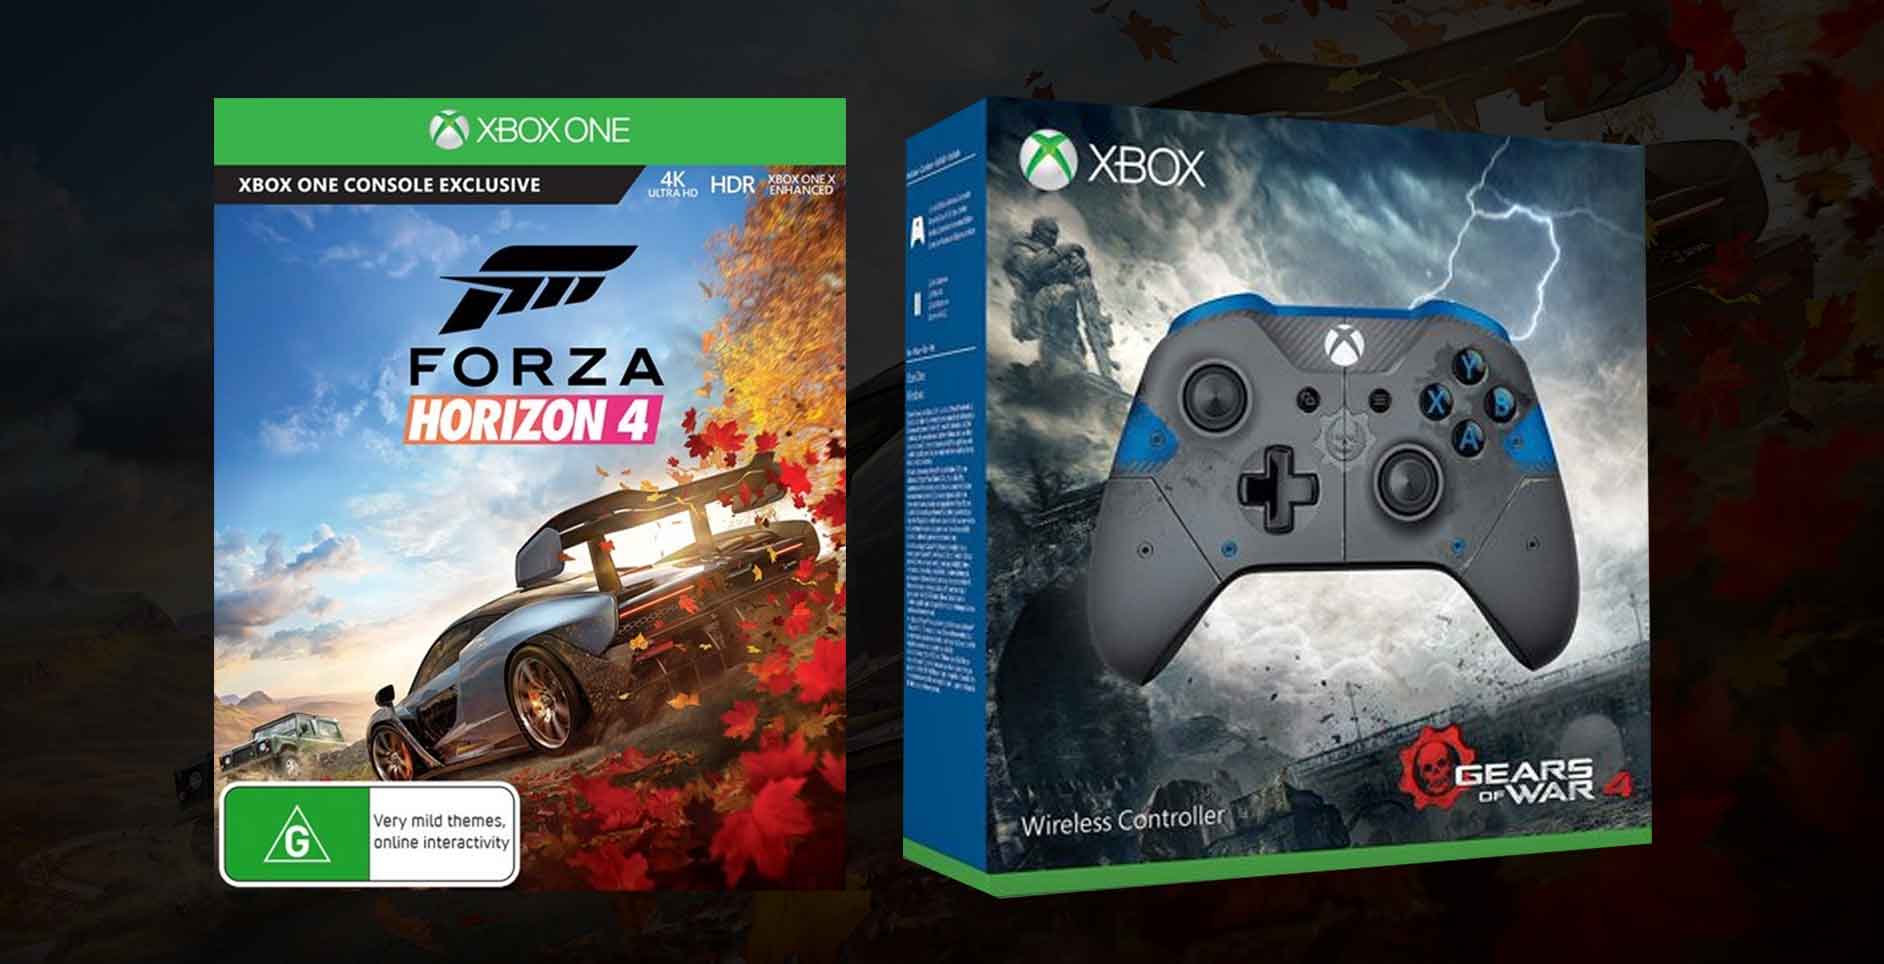 Forza Horizon 4 Ultimate